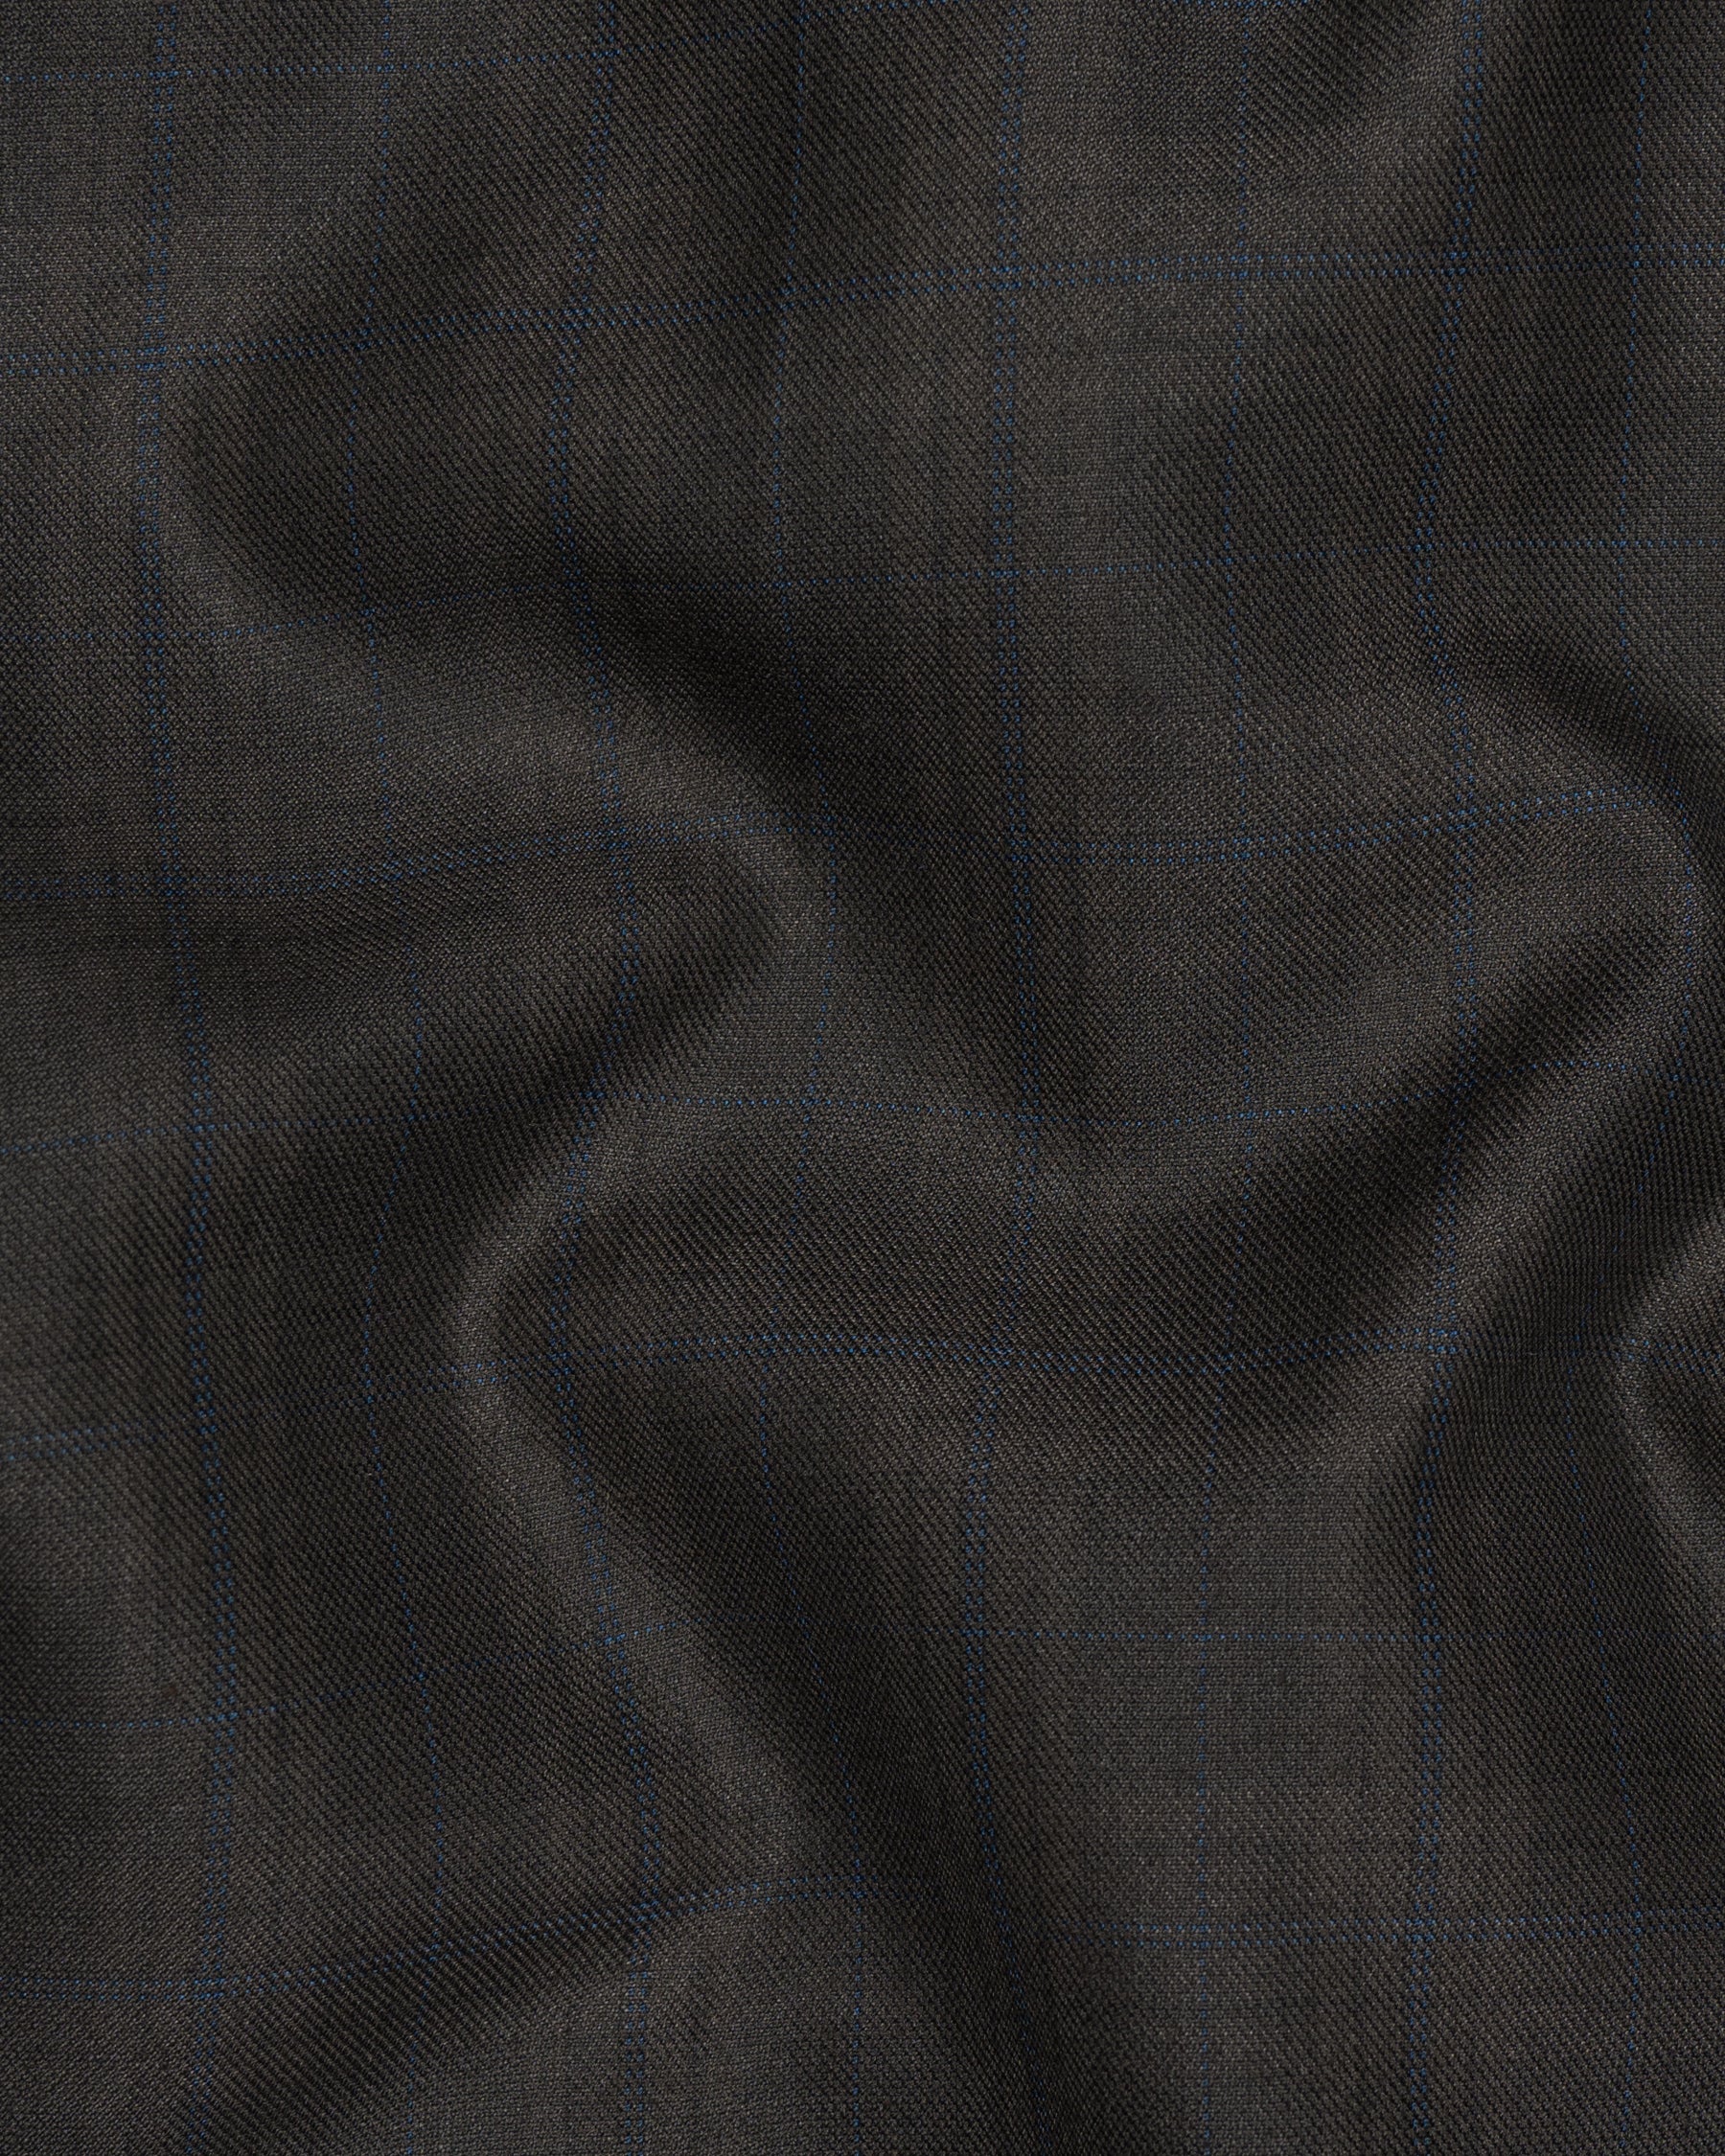 Thunder brown Plaid Wool Rich Waistcoat V1424-36, V1424-38, V1424-40, V1424-42, V1424-44, V1424-46, V1424-48, V1424-50, V1424-52, V1424-54, V1424-56, V1424-58, V1424-60